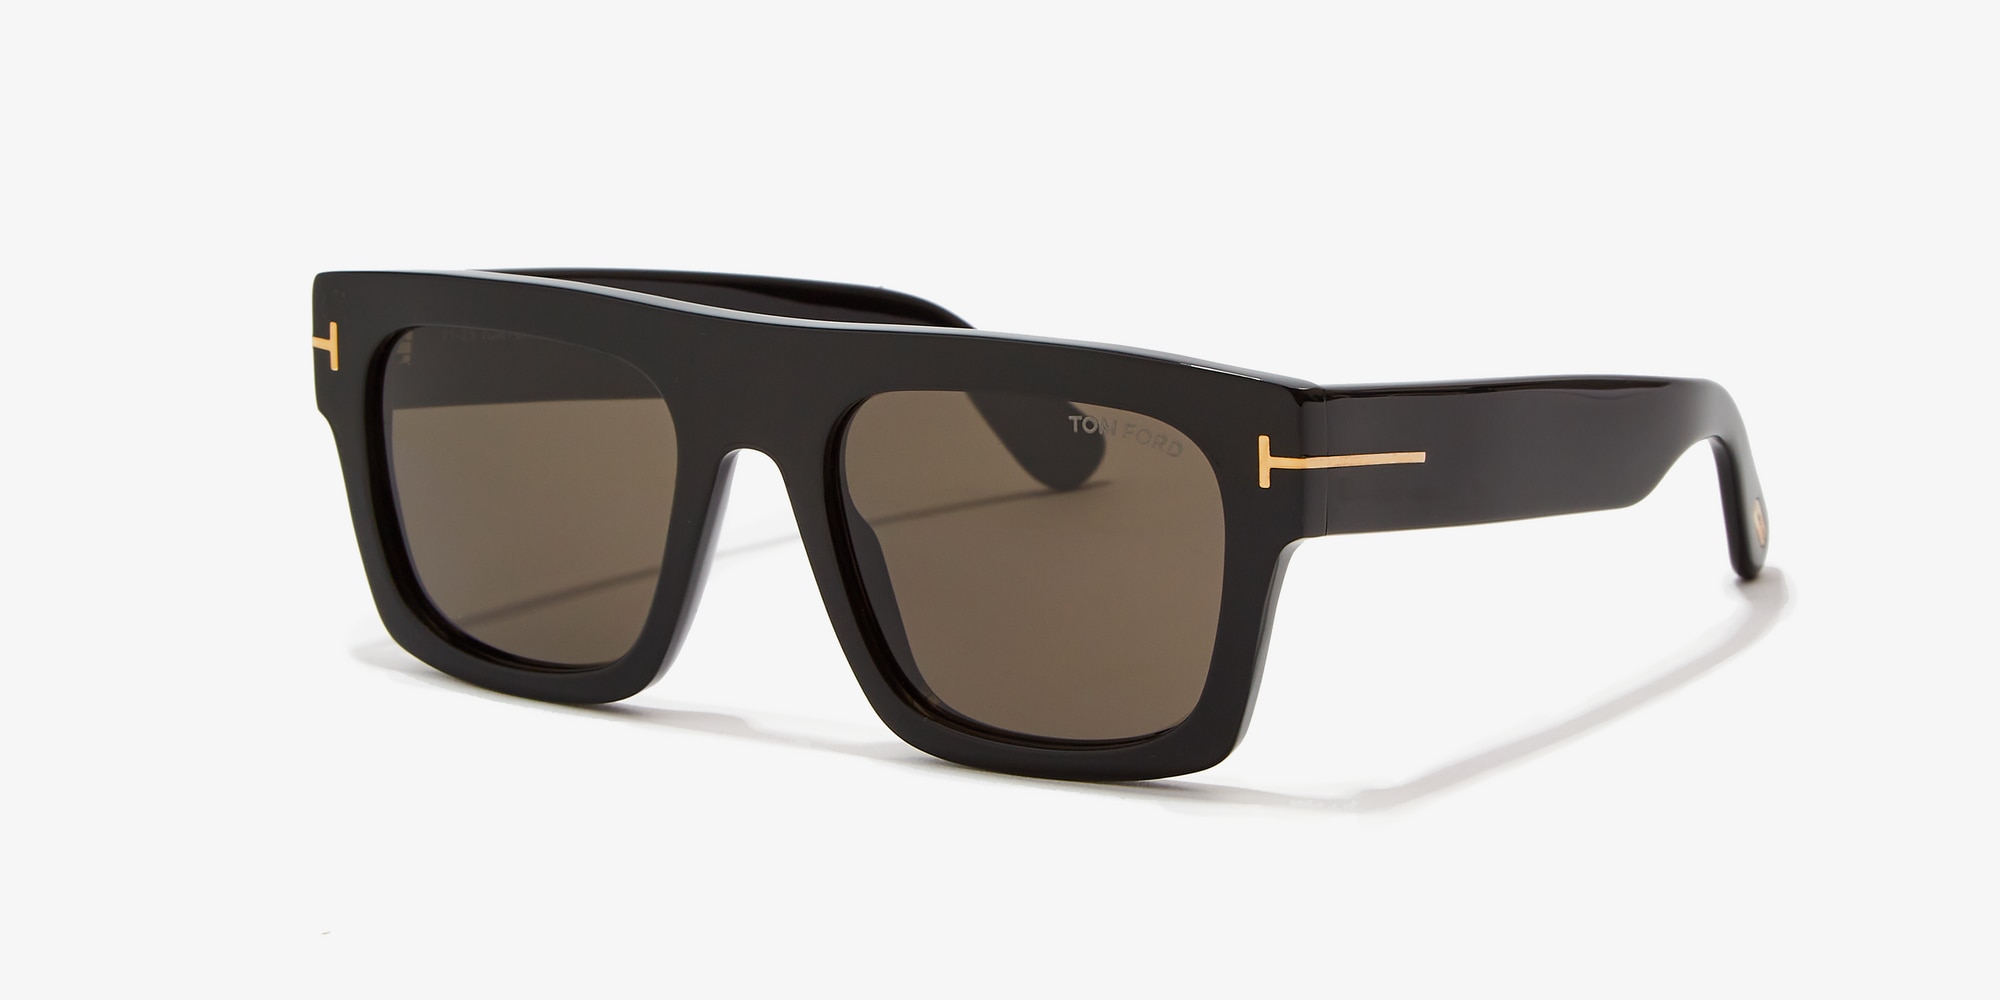 Miu Miu MU 11WS 54 Dark Grey & Black Sunglasses | Sunglass Hut USA